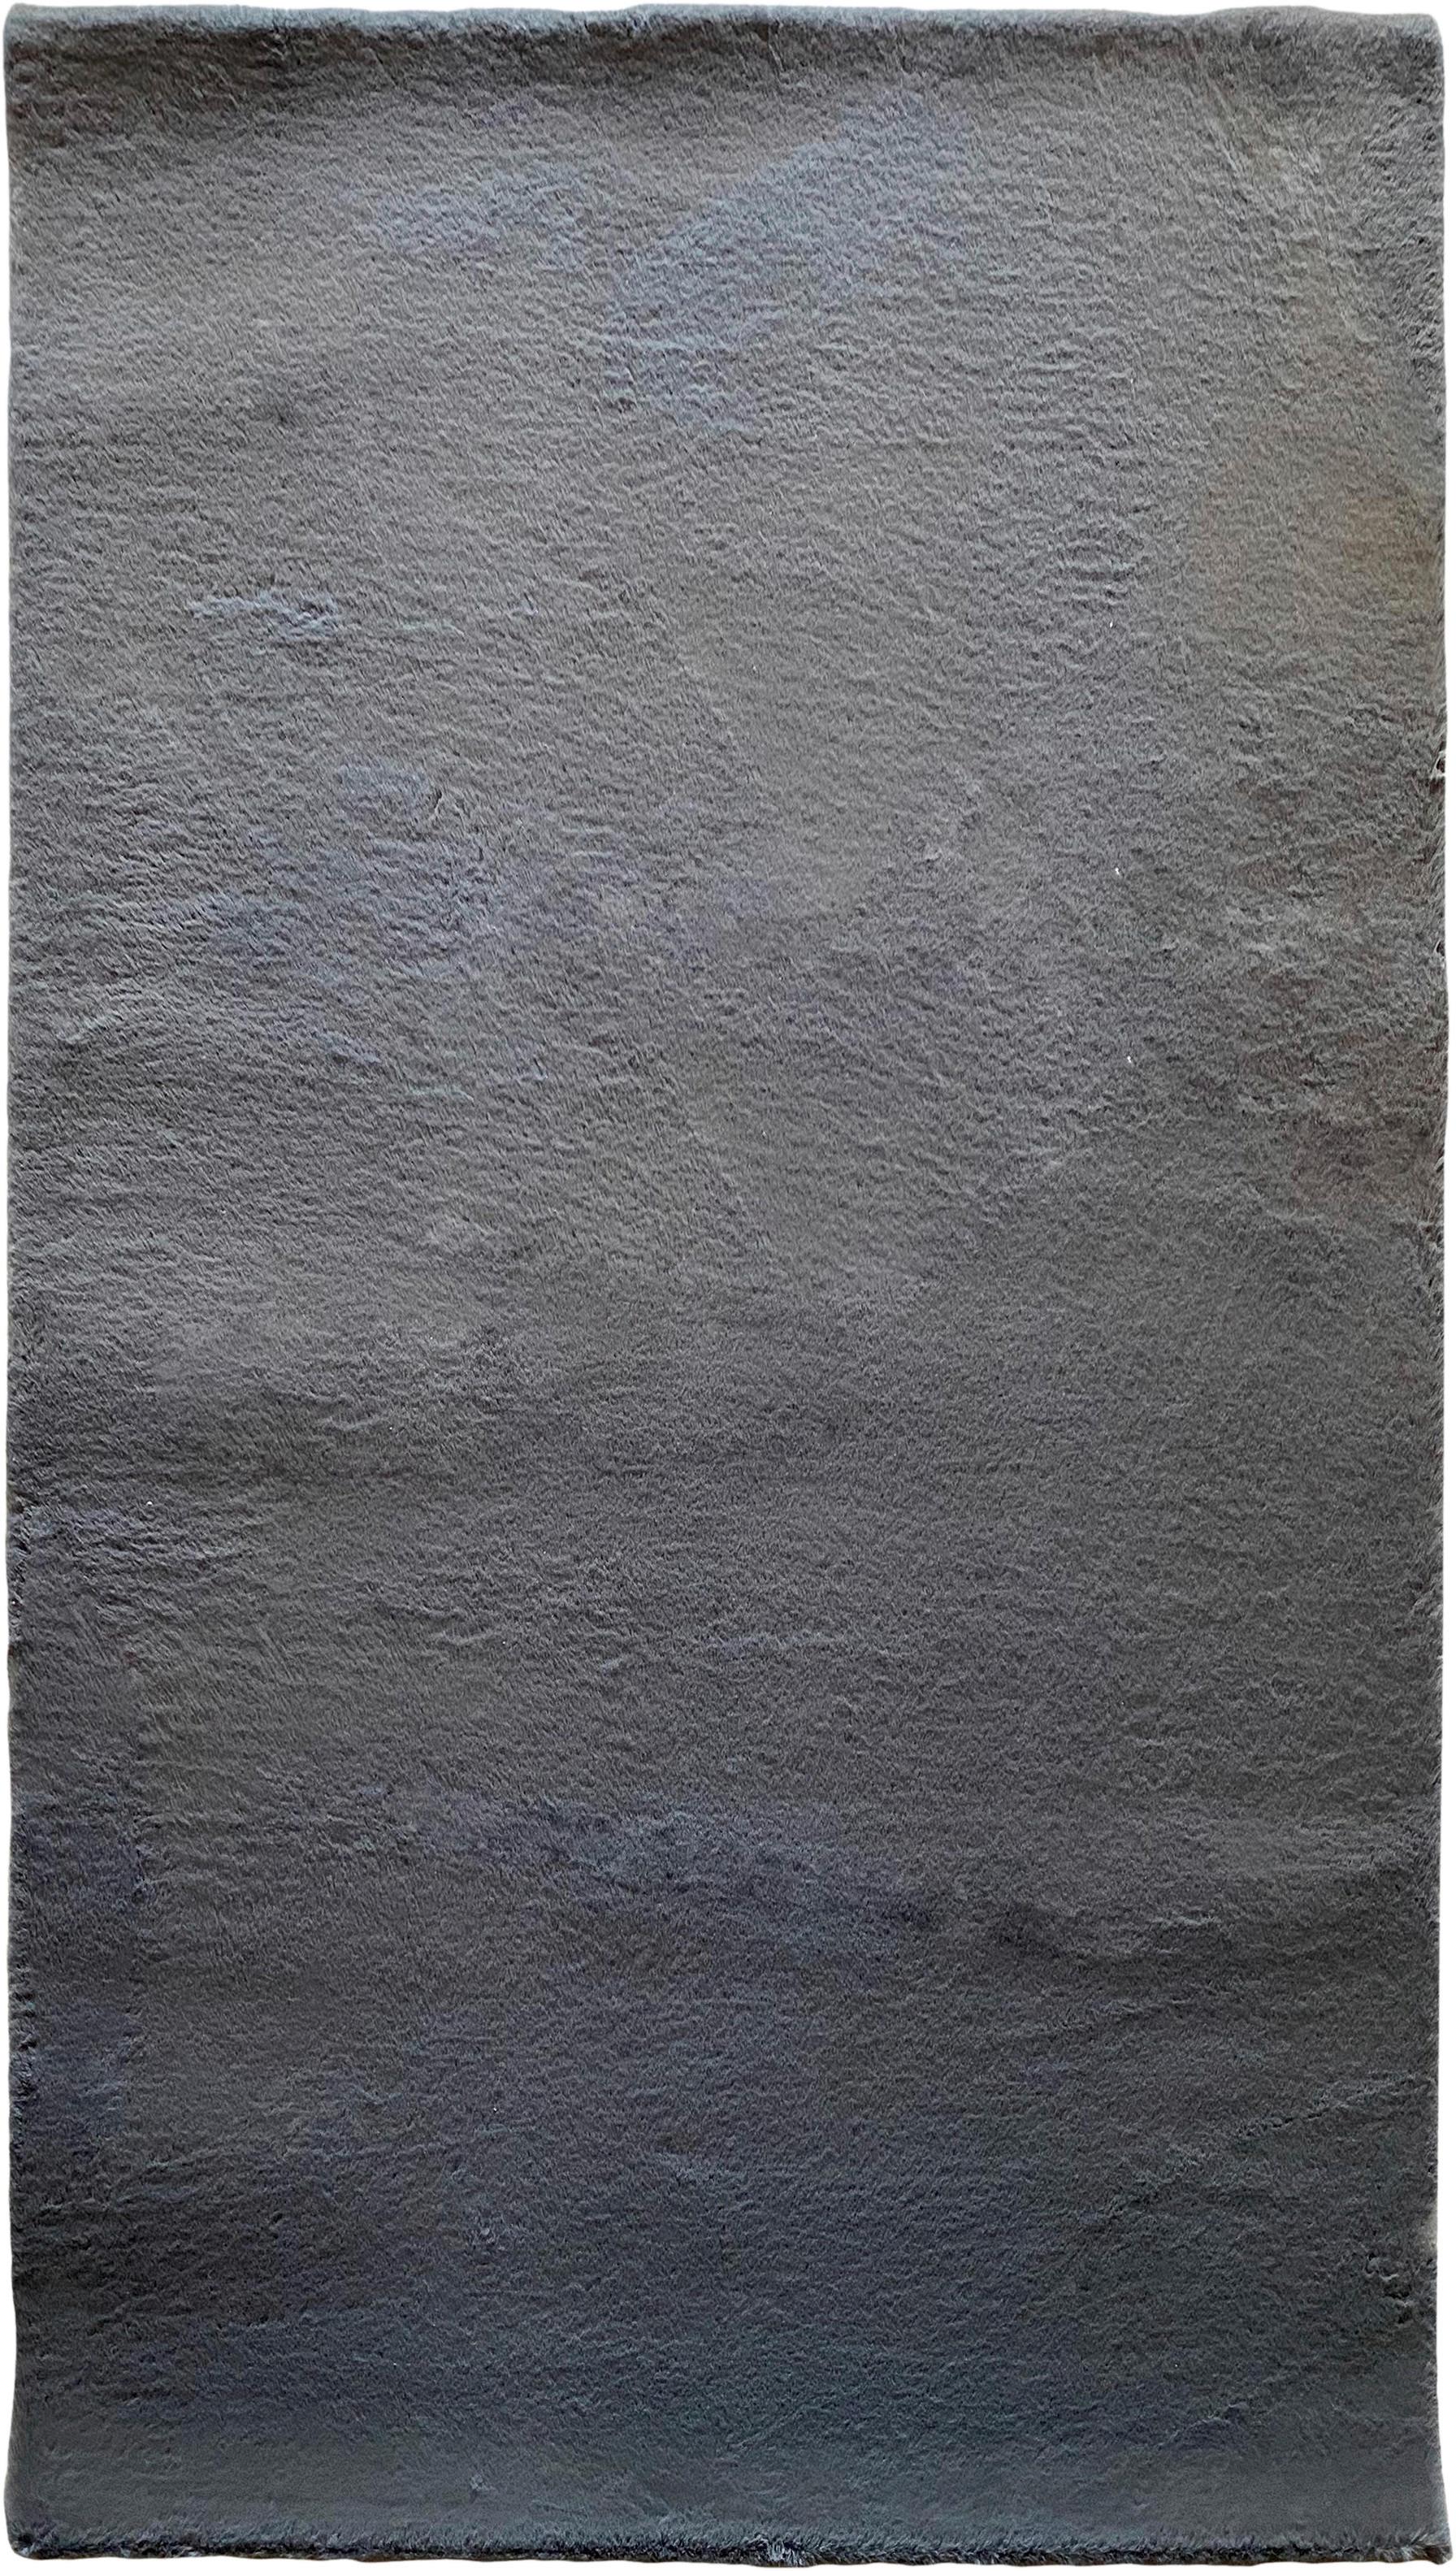 Fellteppich Magarete Grau 80x150 cm - Dunkelgrau/Grau, Textil (80/150cm) - Luca Bessoni